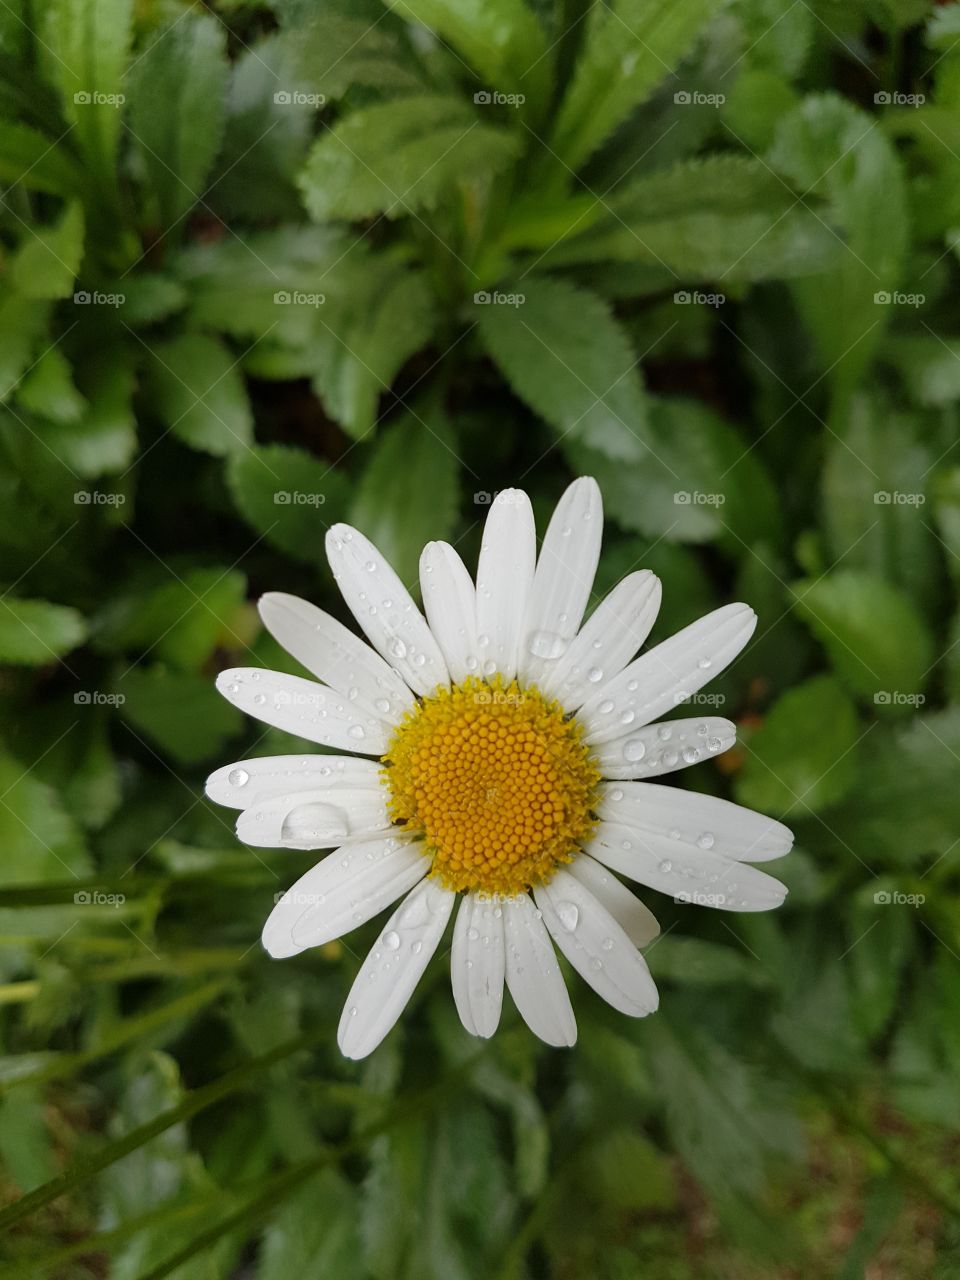 daisy - beautiful flower